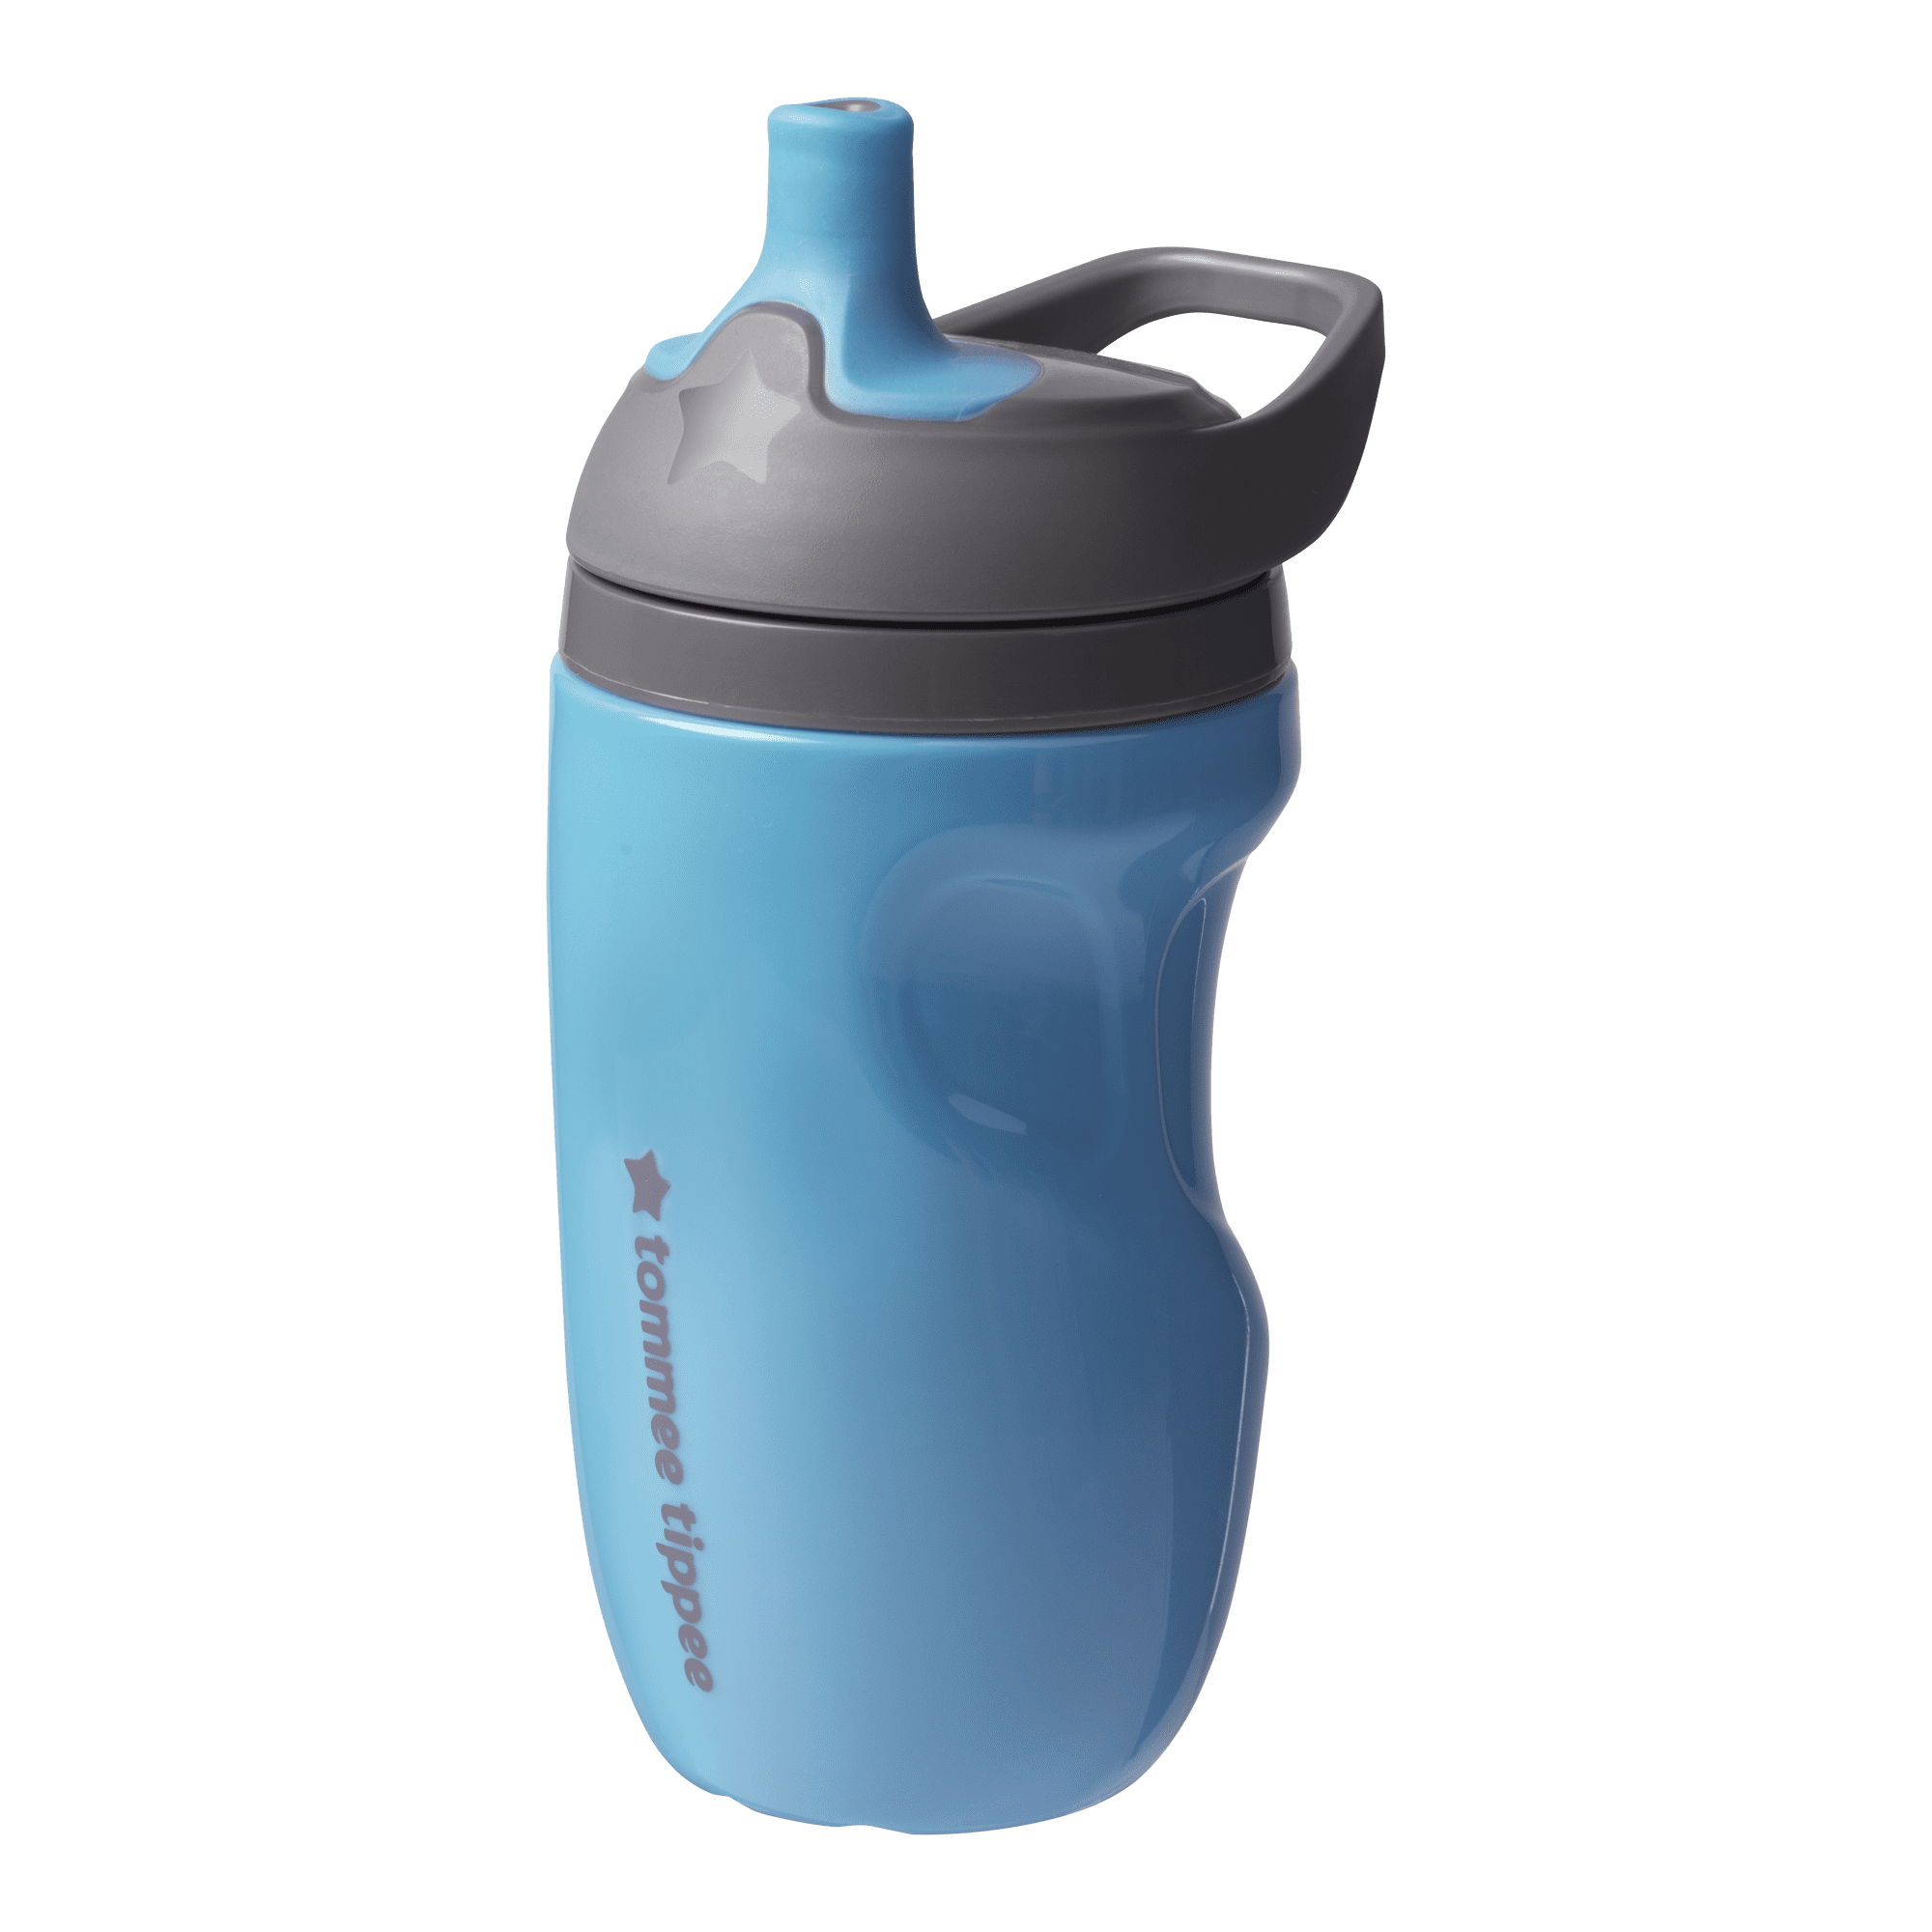 Tommee Tippee Super Star Insulated Sportee Bottle - 9.00 fl oz